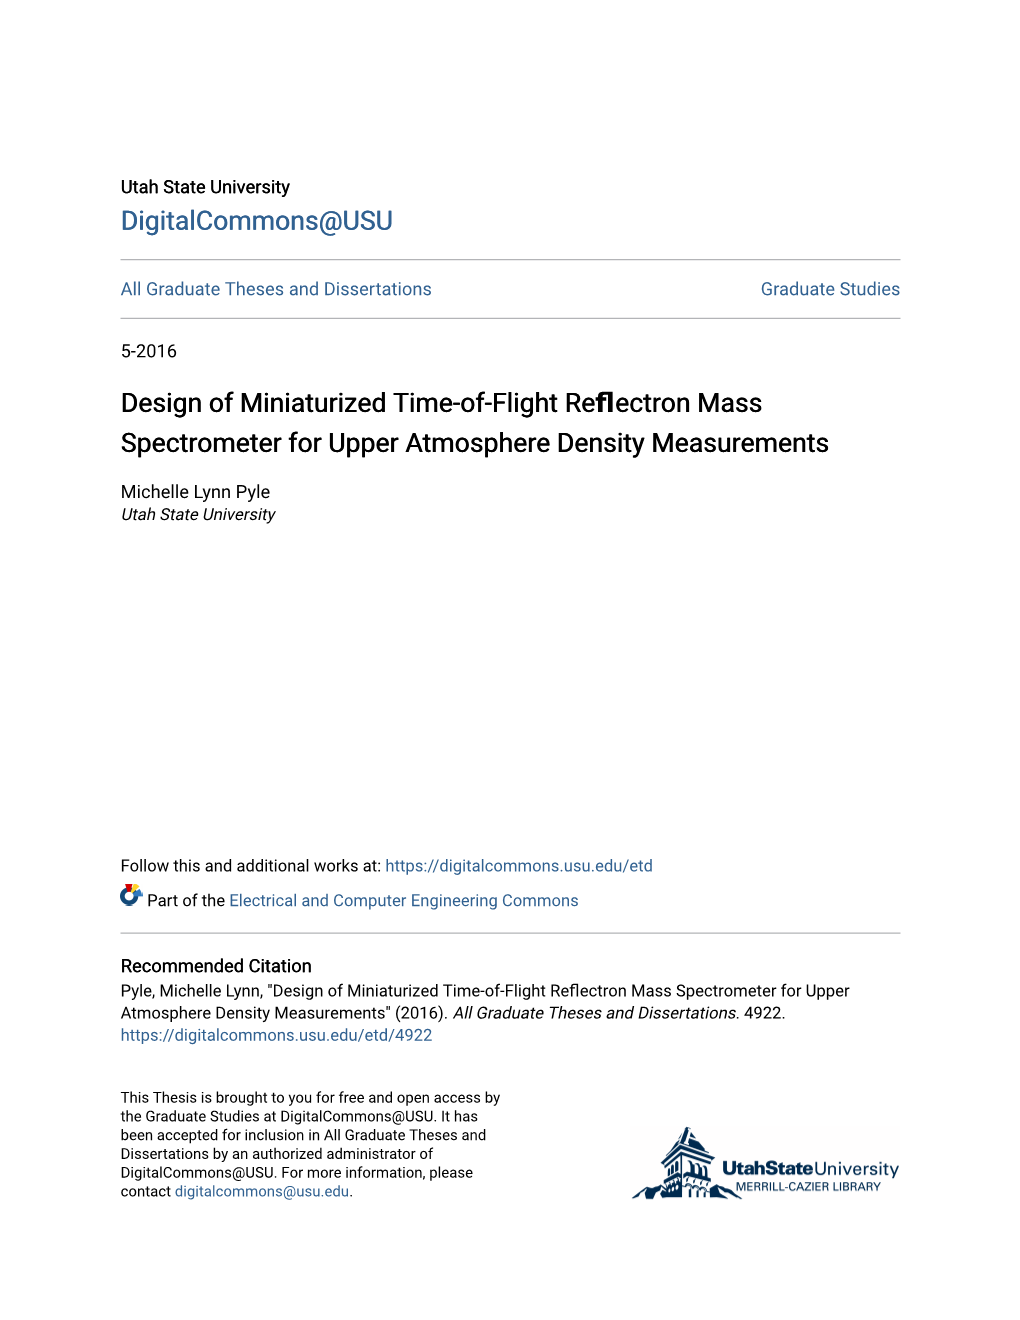 Design of Miniaturized Time-Of-Flight Reflectron Mass Spectrometer for Upper Atmosphere Density Measurements